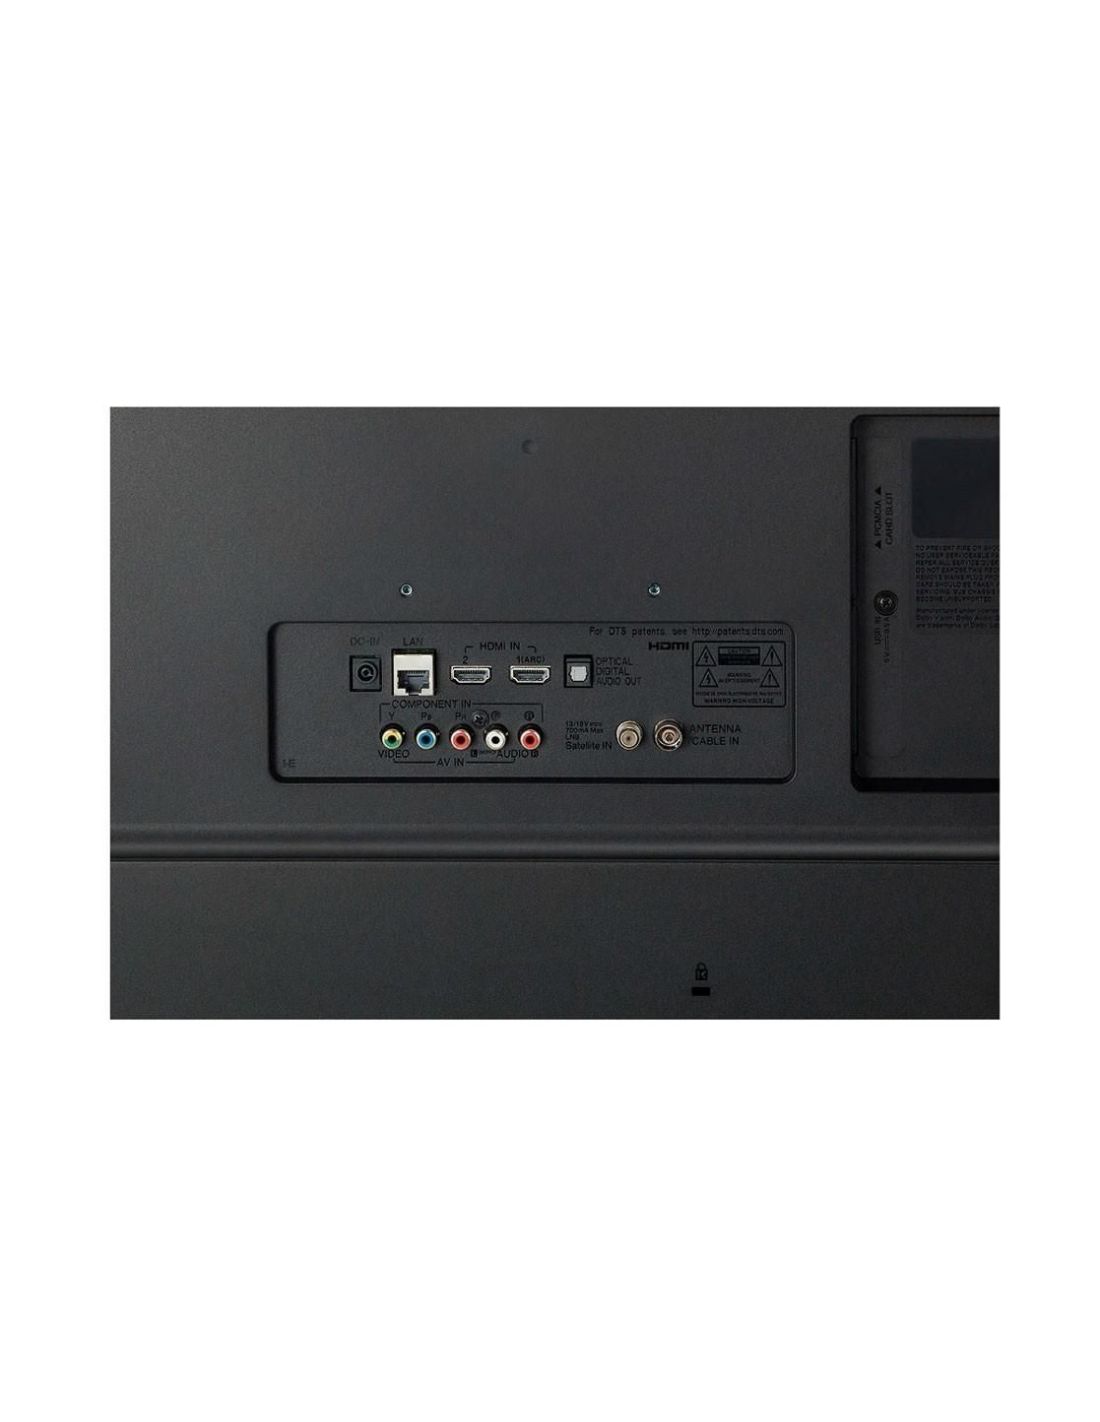 LG 28TN515S-PZ - Monitor Smart TV de 70 cm (28) con Pantalla LED HD (1366 x